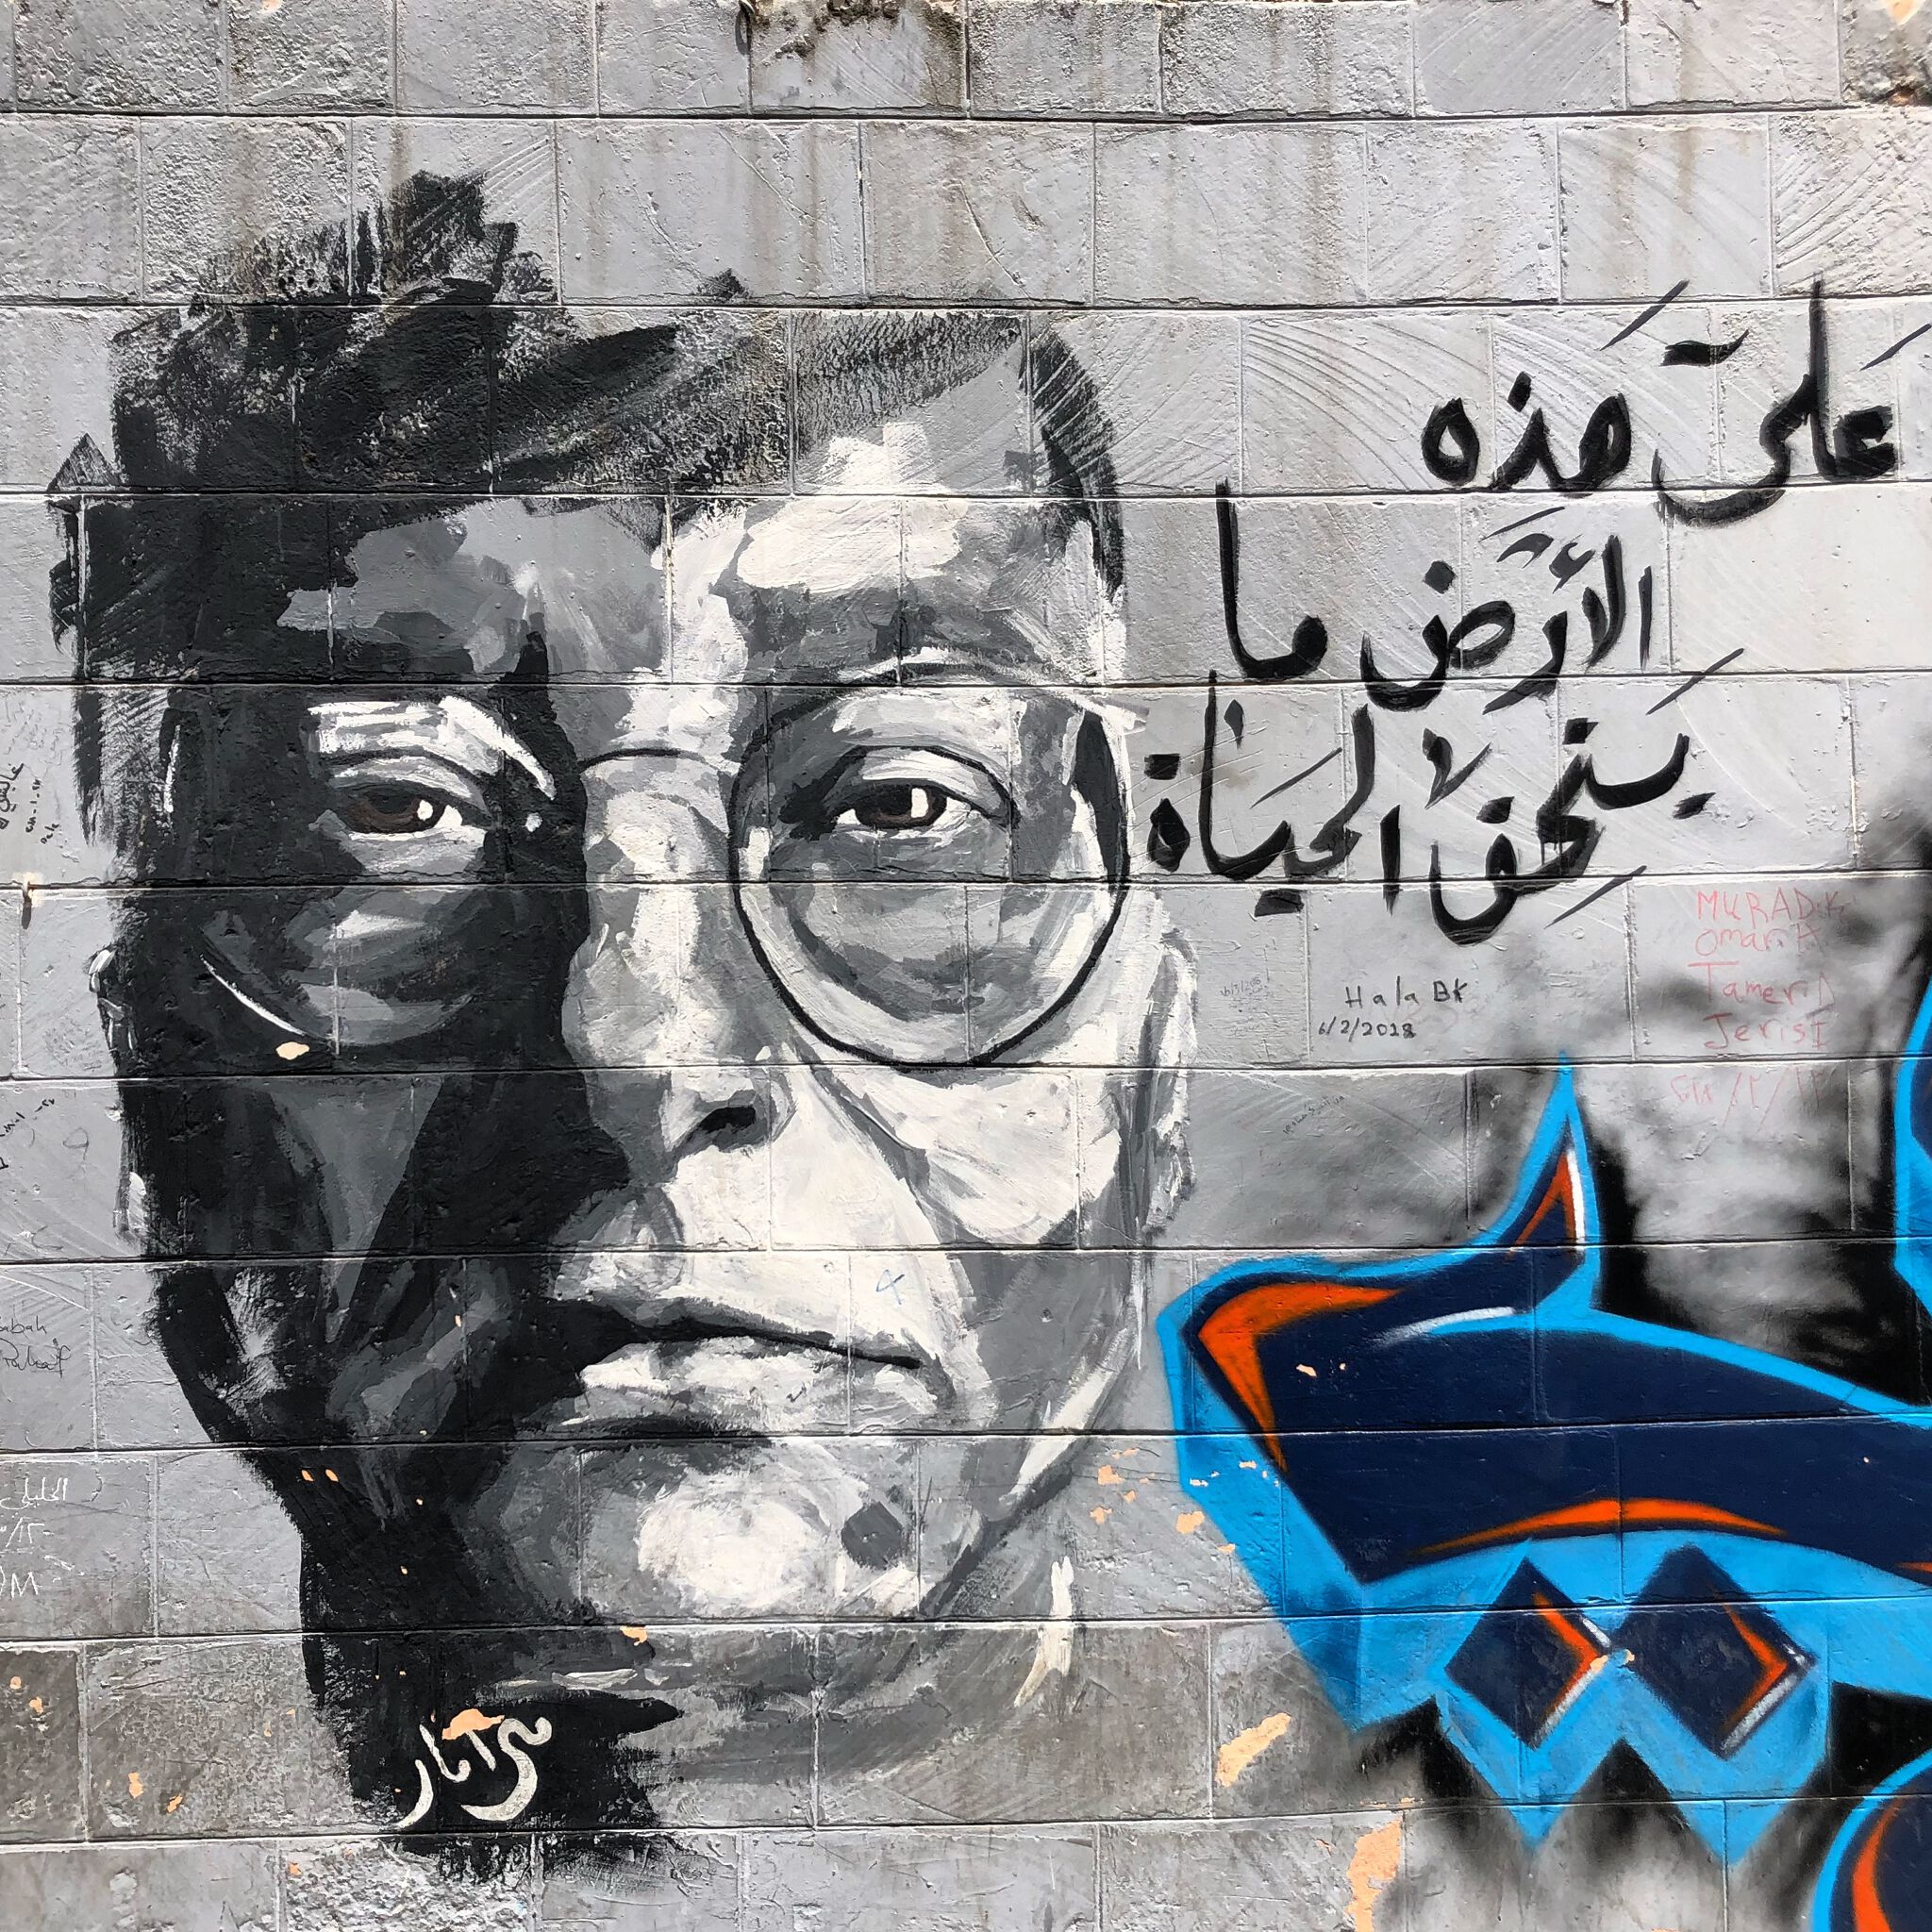 Aboodgraffiti, Miramar Al-Nayyar&mdash;"On this land, there's what's worth living"